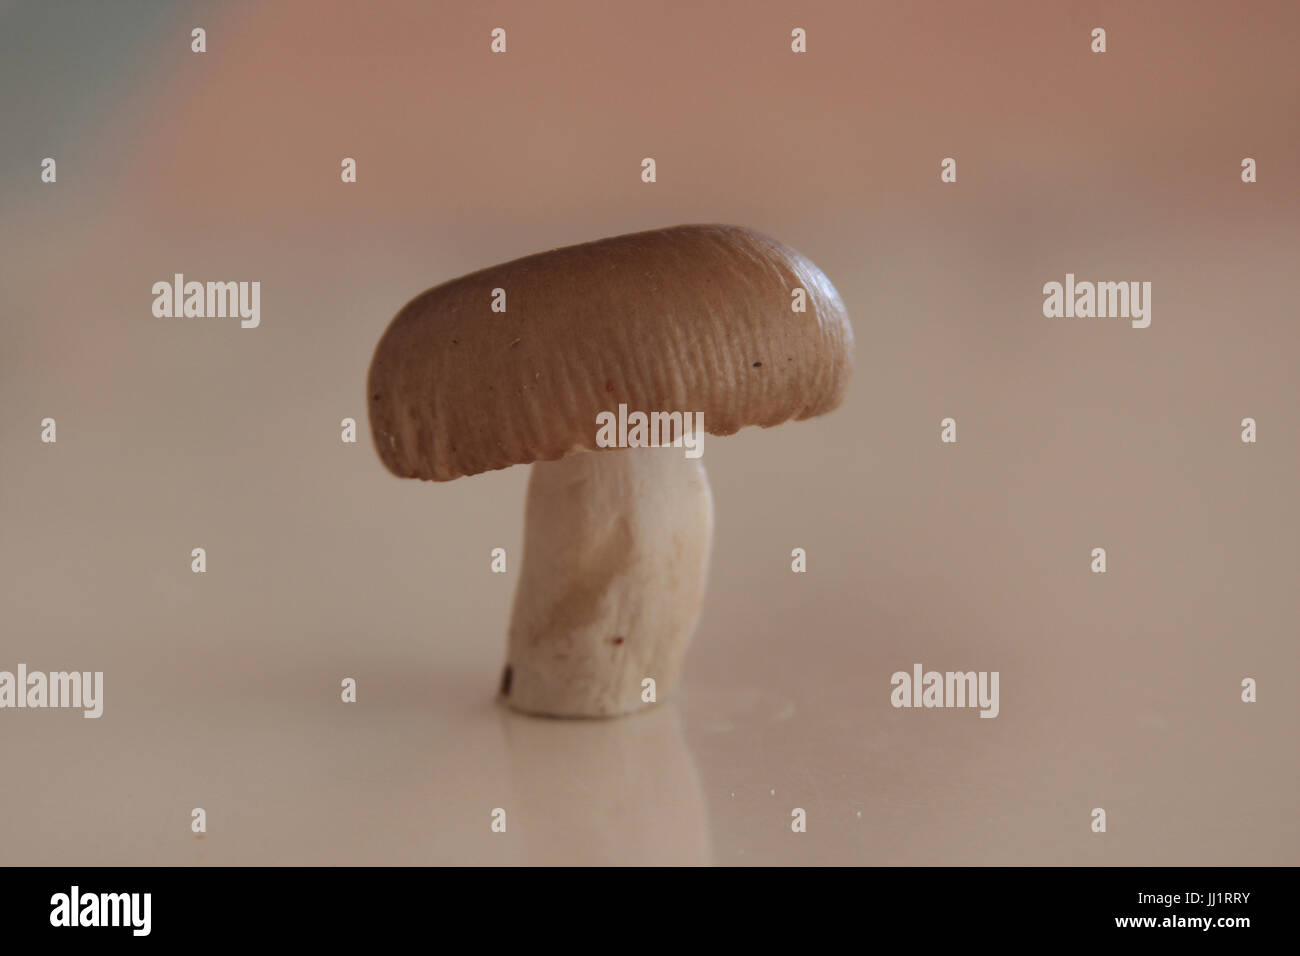 Mushroom, São Paulo, Brazil Stock Photo